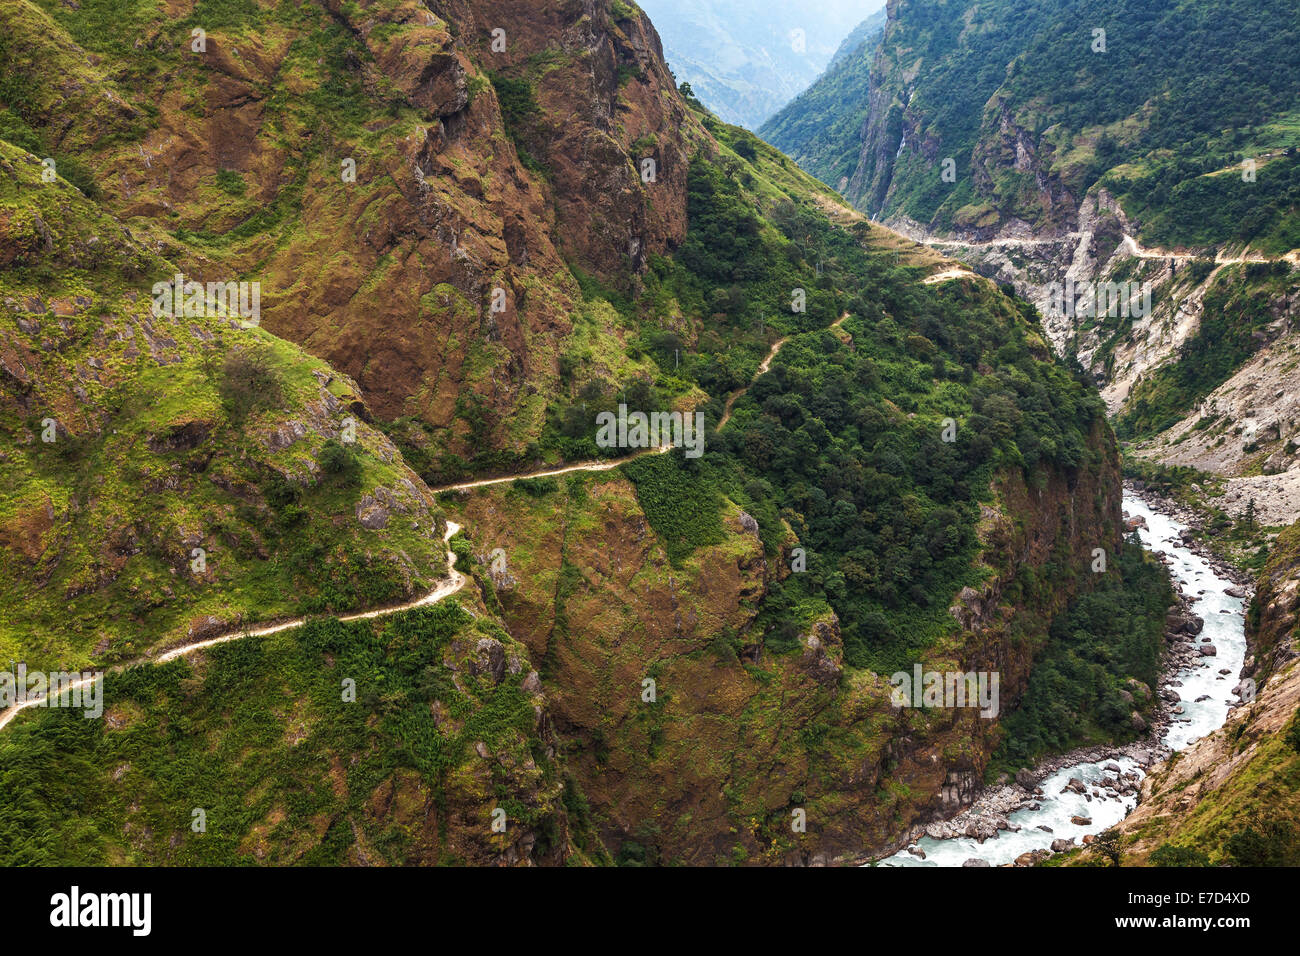 Mountain path in Himalaya mountains, Nepal. Stock Photo